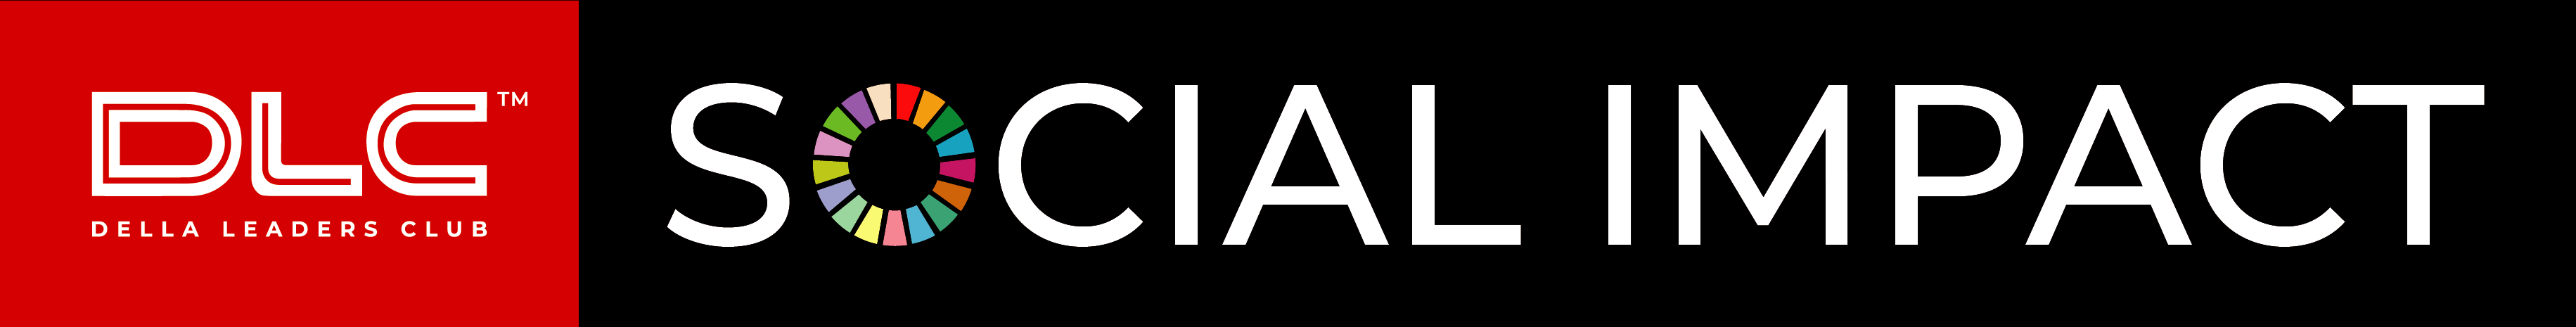 social impact logo